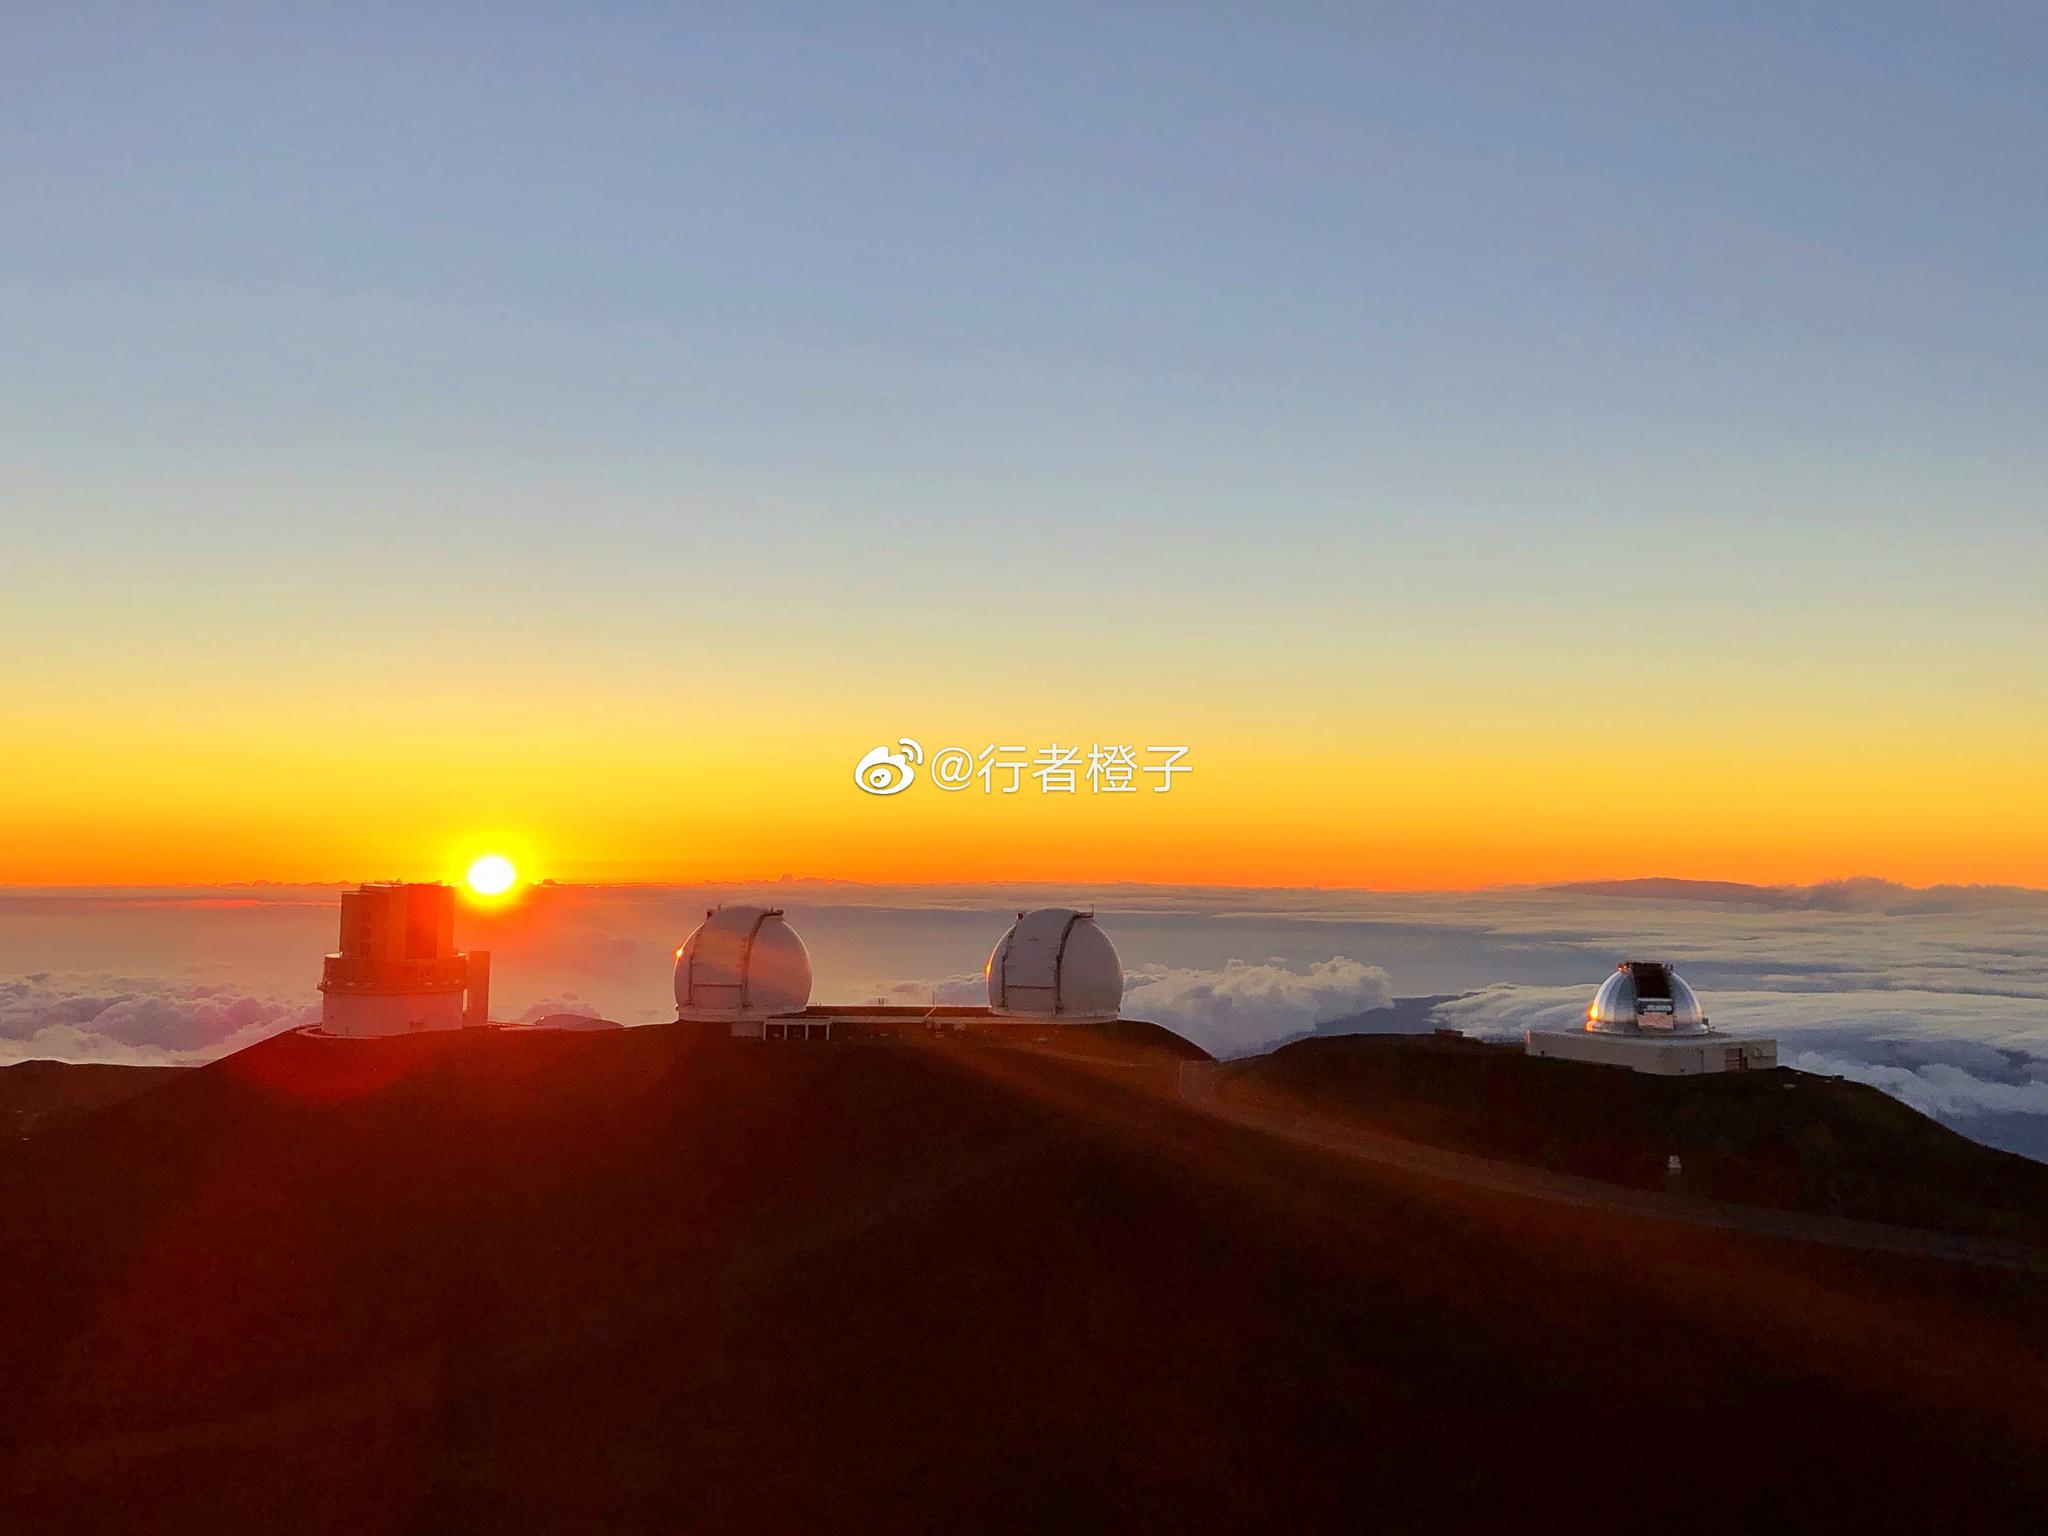 File:Mauna Kea observatory.jpg - Wikipedia